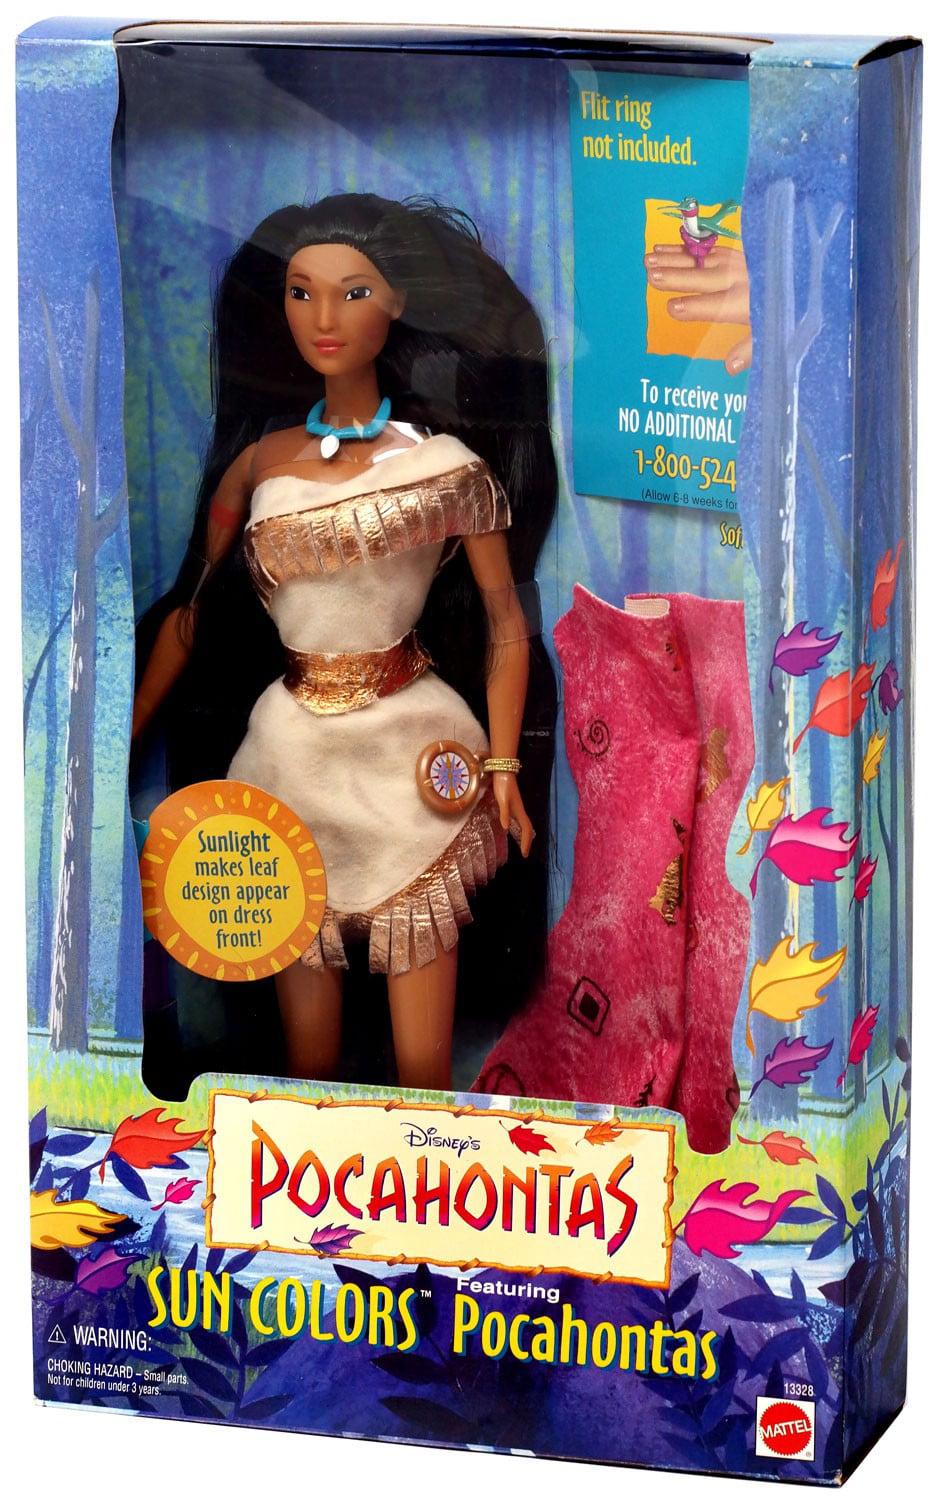 Disney Princess Sun Colors Pocahontas Doll